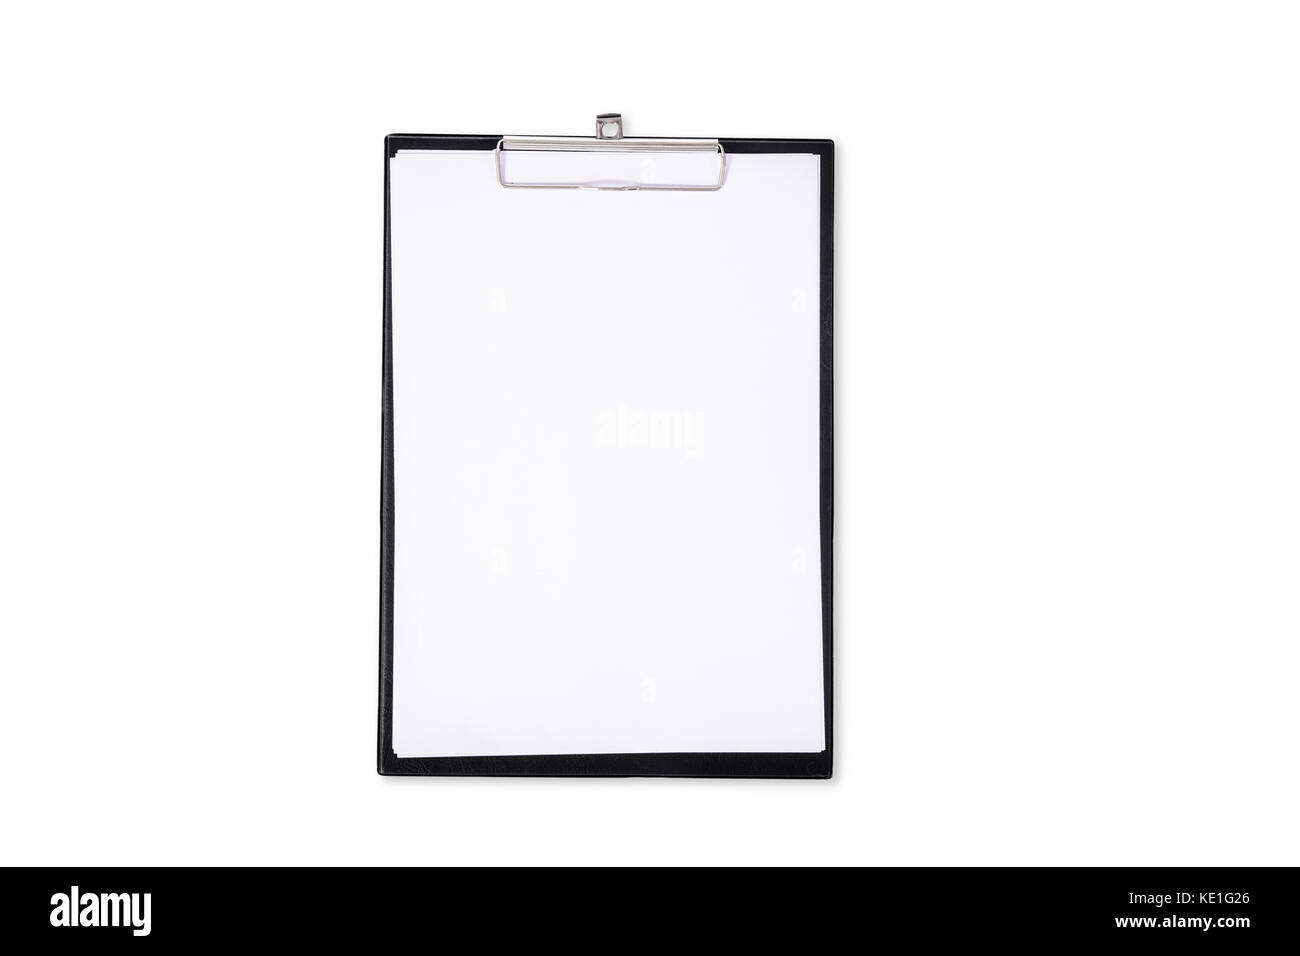 Portapapeles con papel blanco A4 en blanco sobre fondo blanco aisladas con trazado de recorte Foto de stock